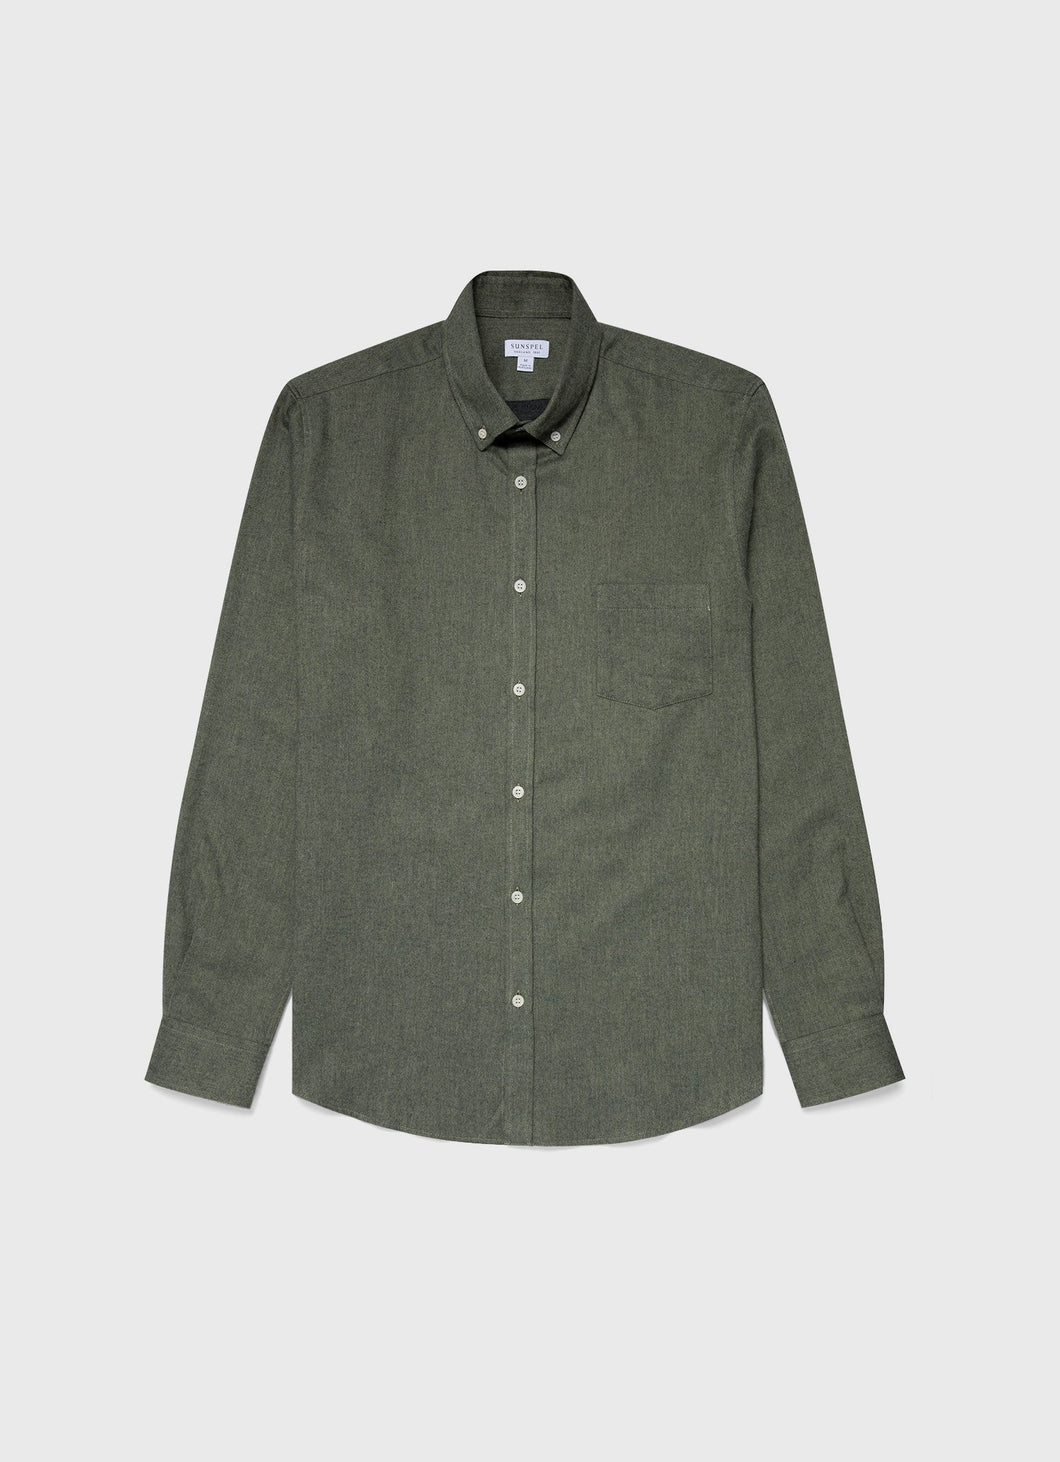 Sunspel - Button Down Flannel Shirt in Green Melange.